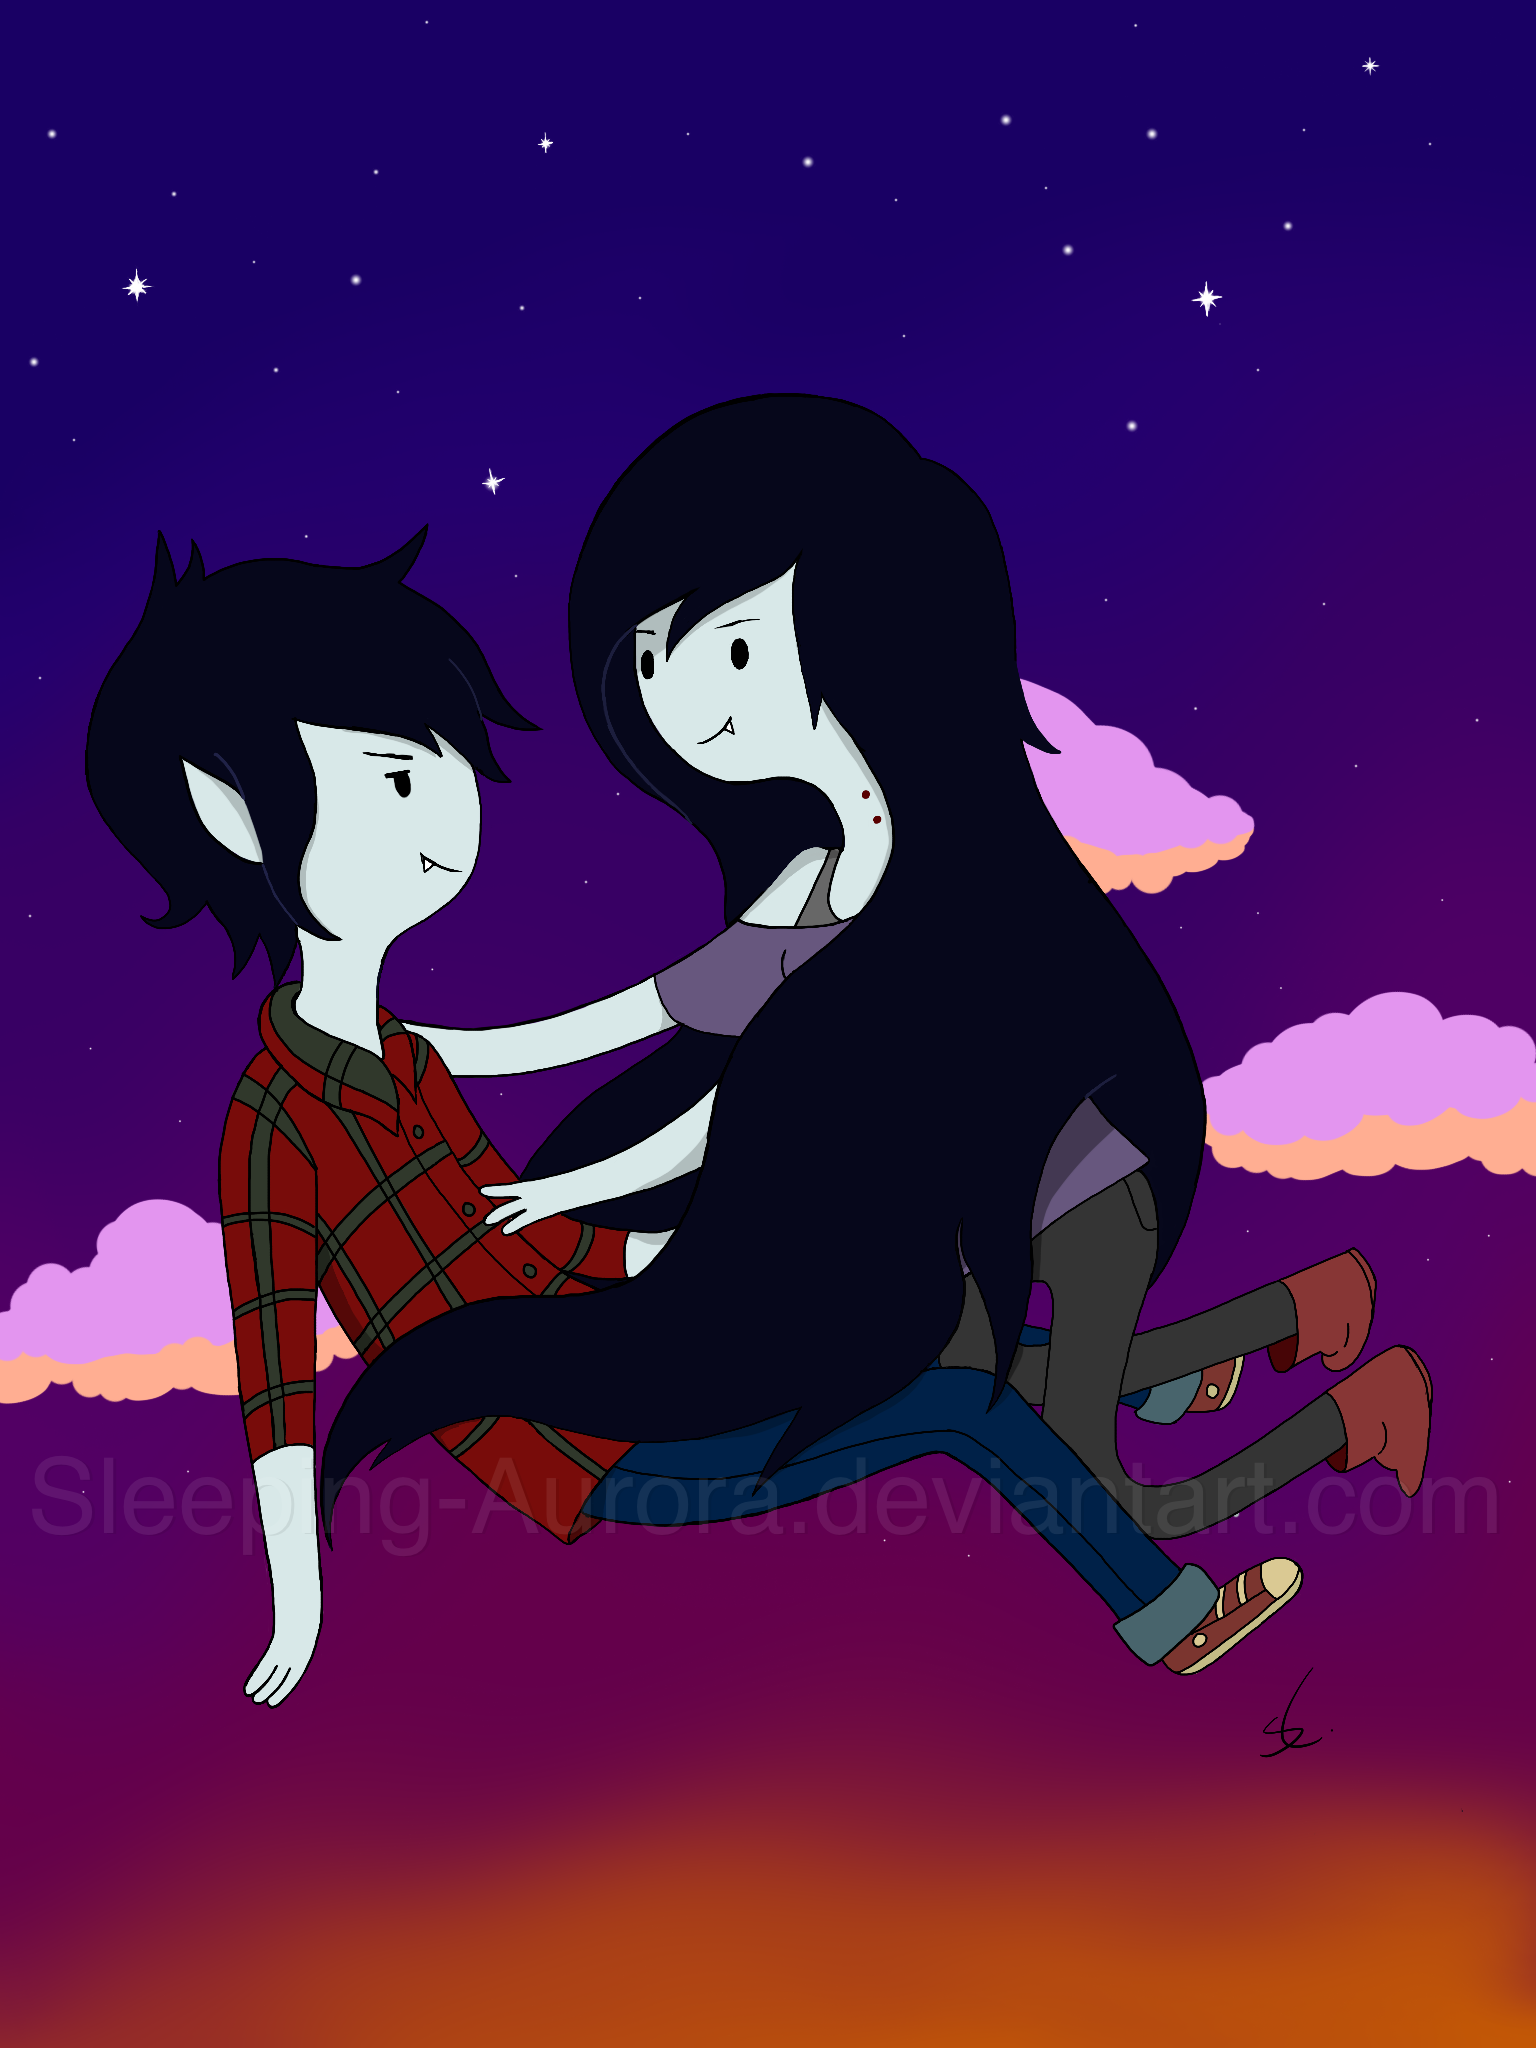 Marceline and Marshall lee by Sleeping-Aurora on DeviantArt